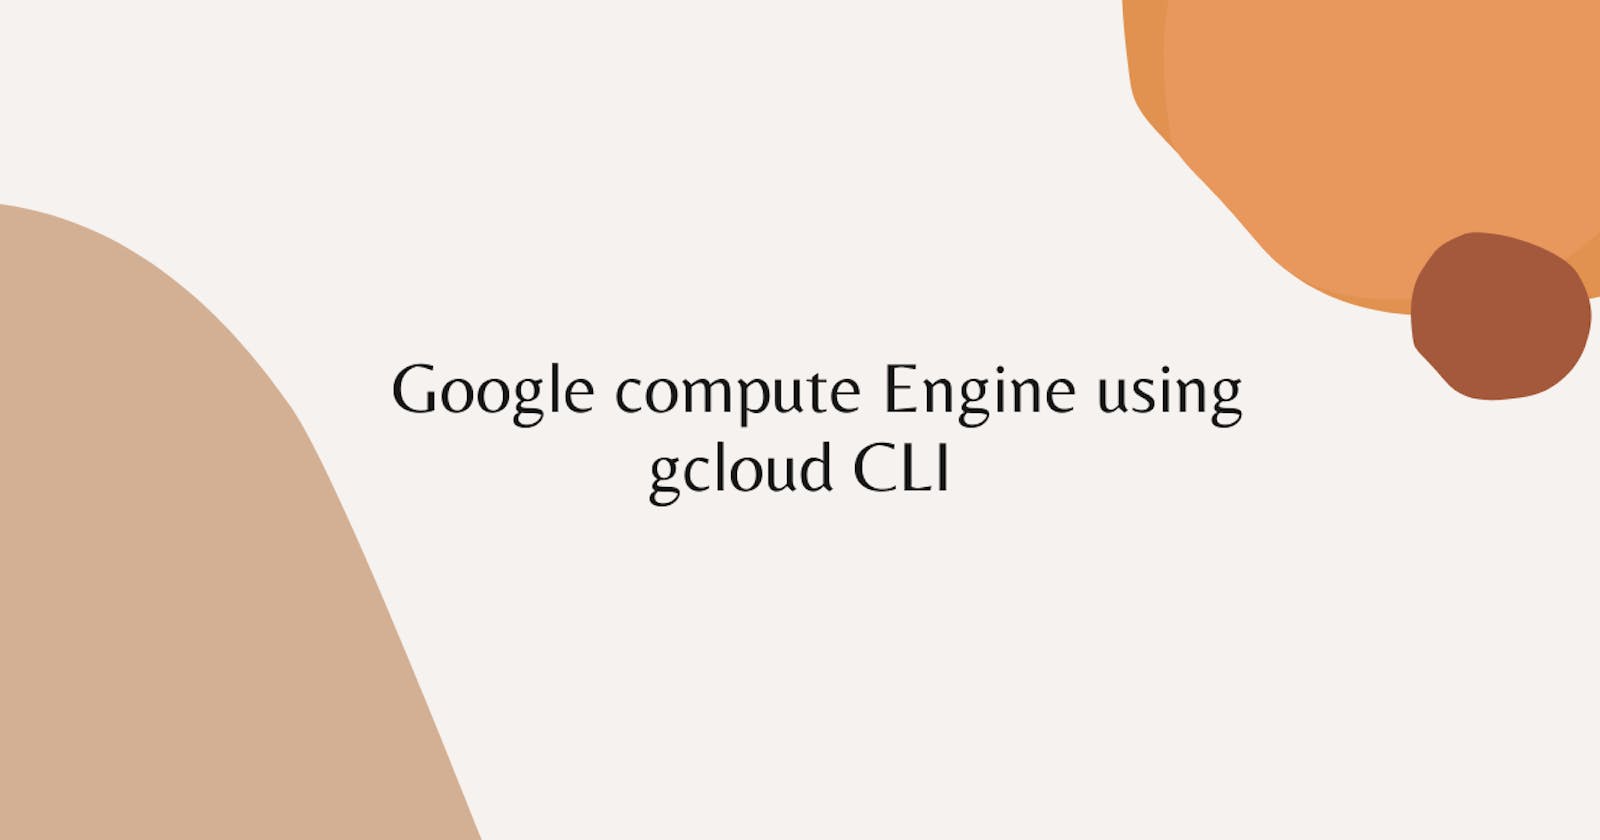 Google compute Engine using gcloud CLI